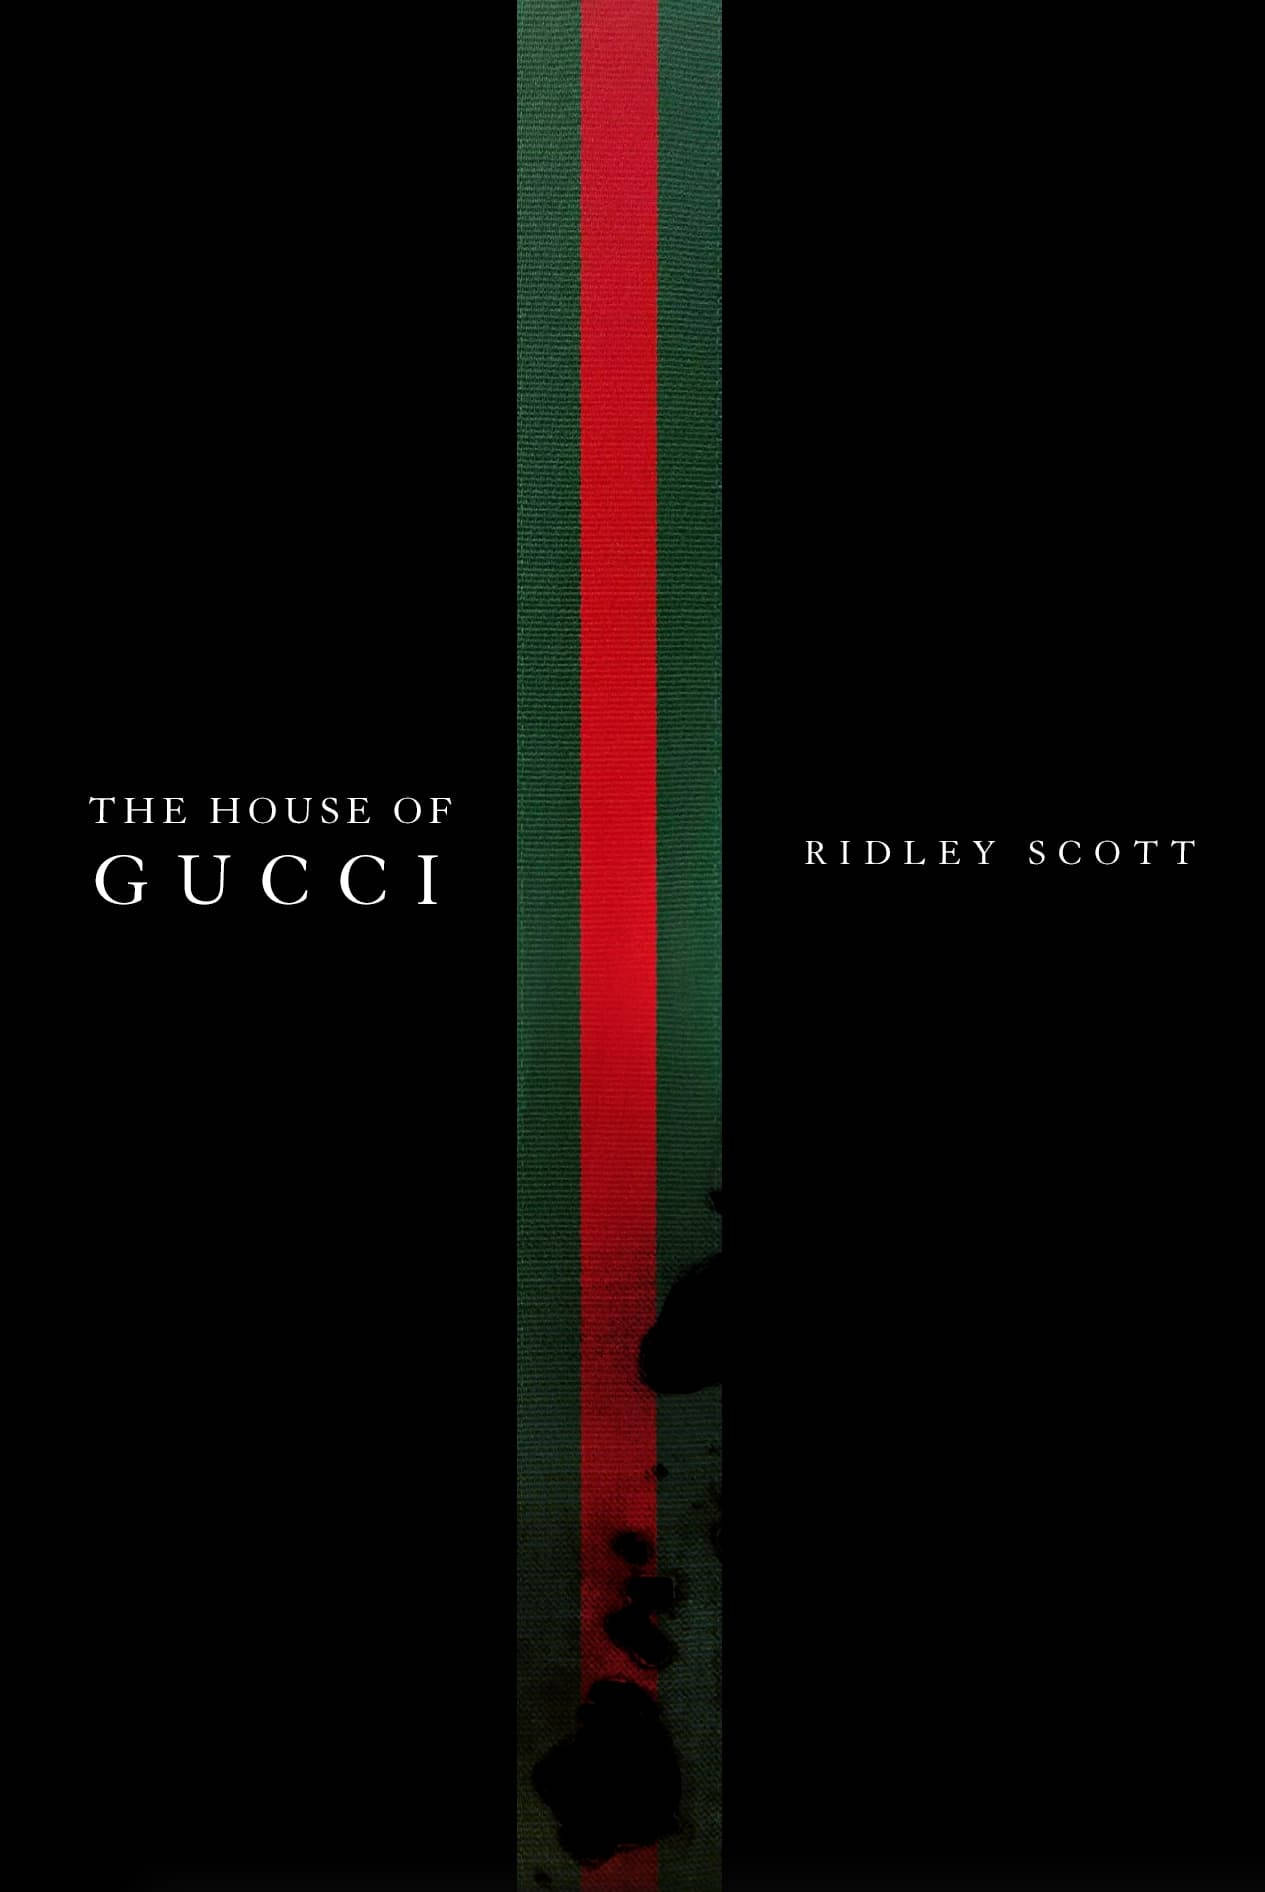 House Of Gucci Signature Stripe Image Wallpaper